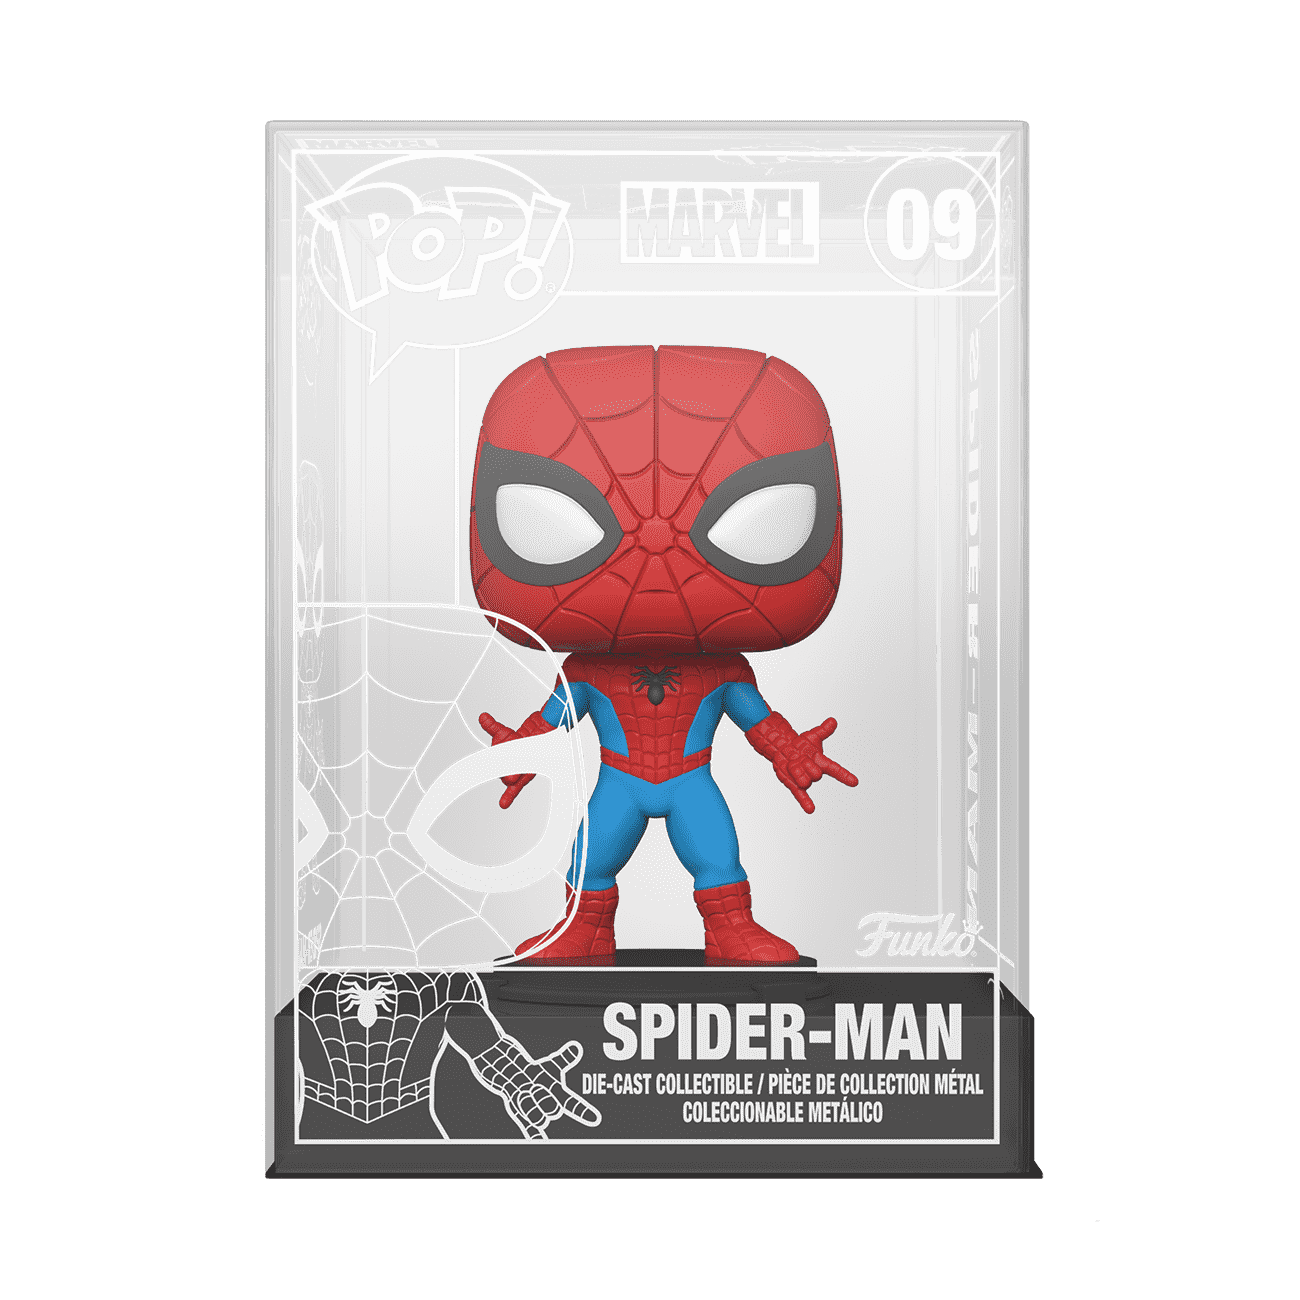 Buy Pop! Spider-Man at Funko.